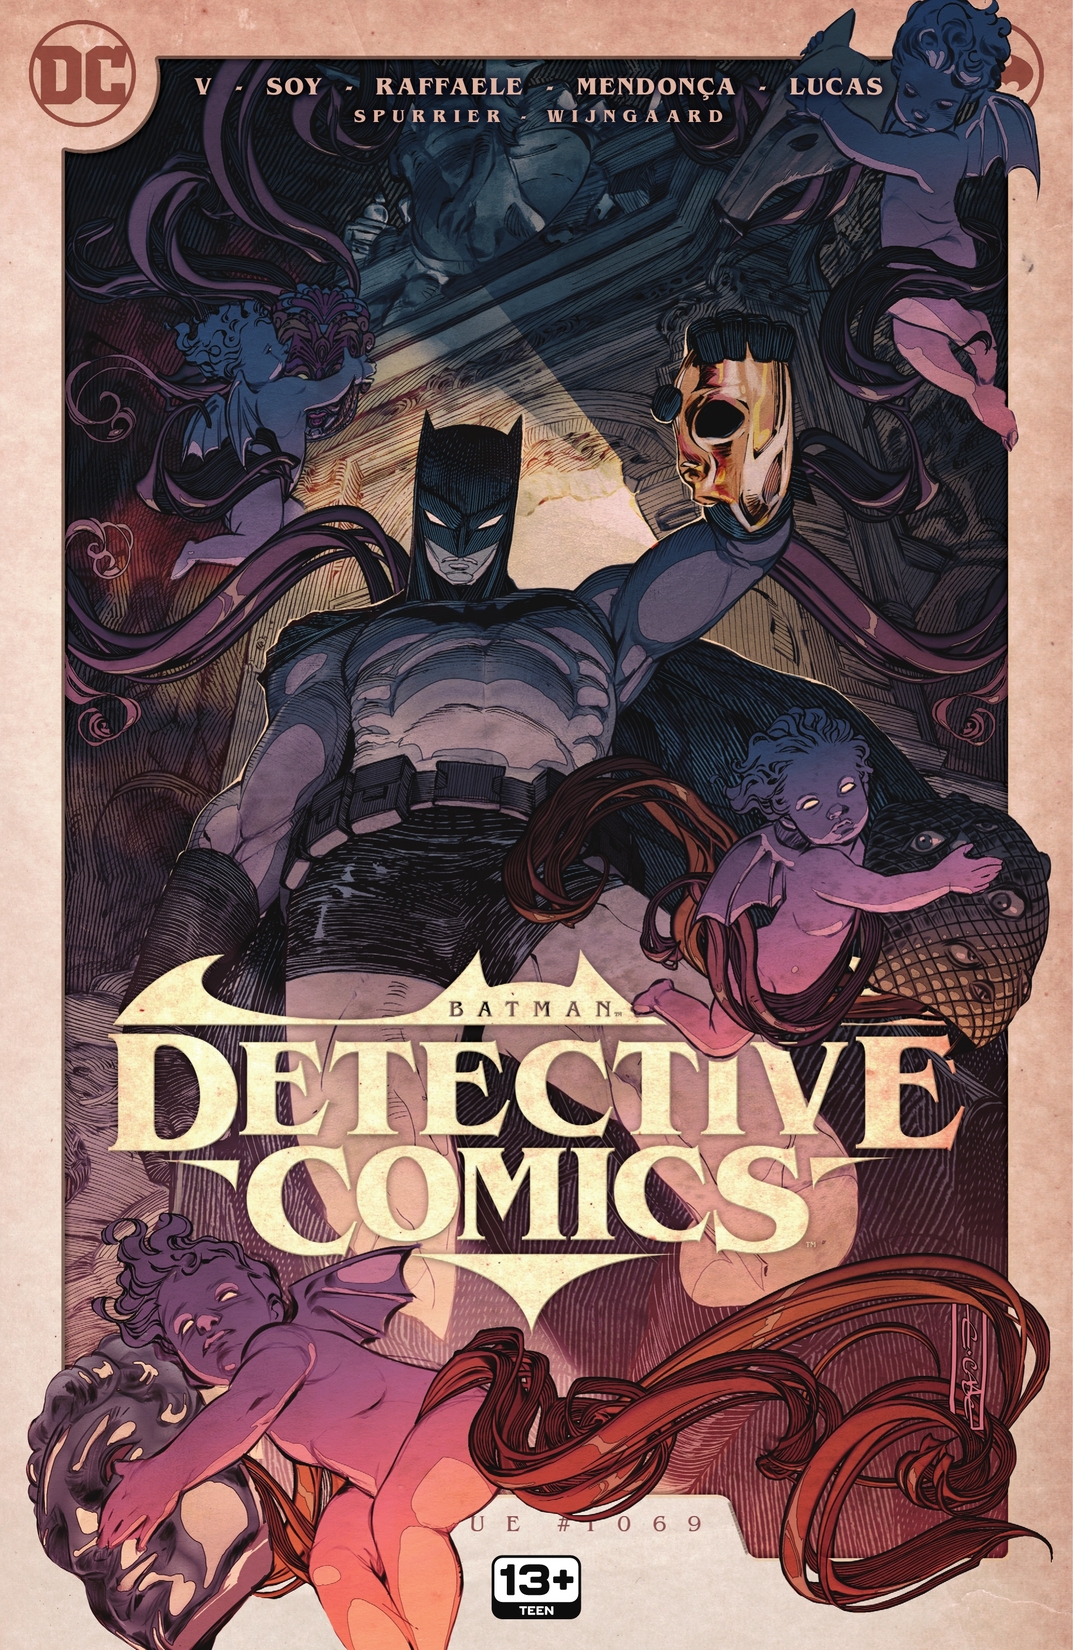 Detective Comics (2016-) #1069 preview images